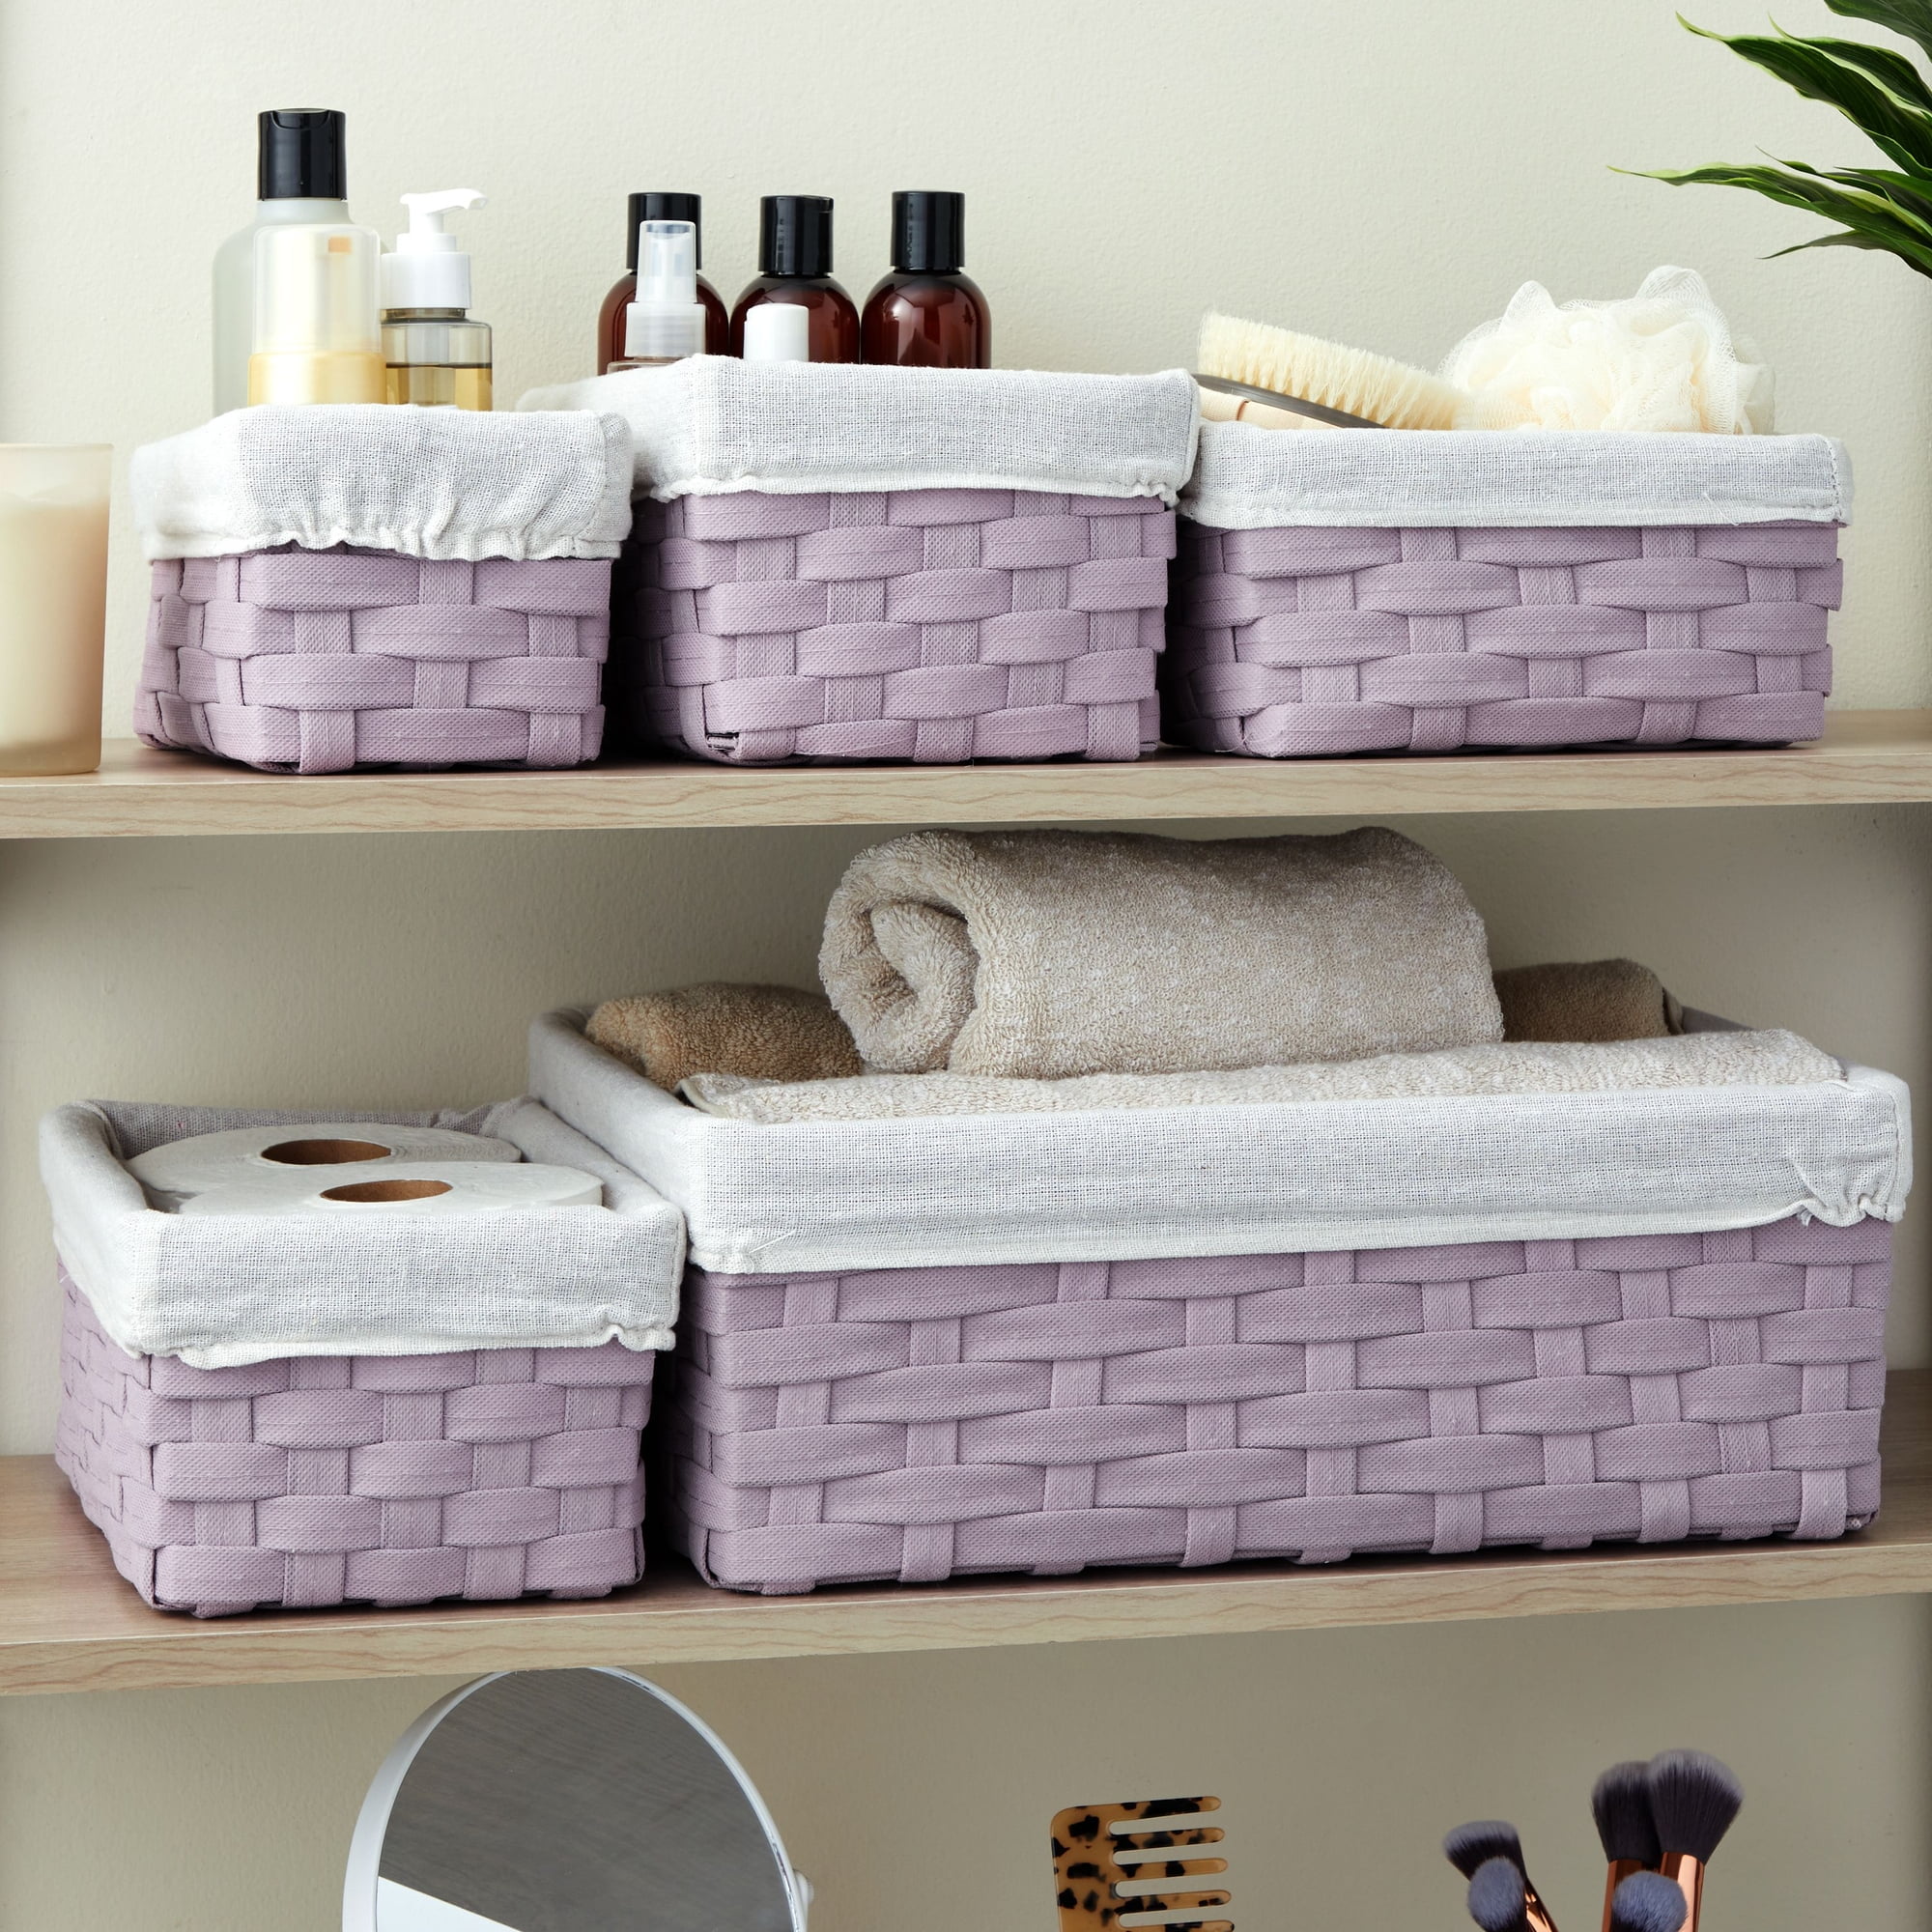 Set of 5 Brown Woven Storage Nesting Baskets for Closet Organization,  Bathroom Shelves, Pantry, Vanity, Bathroom, Small, Rectangular, 3 Sizes